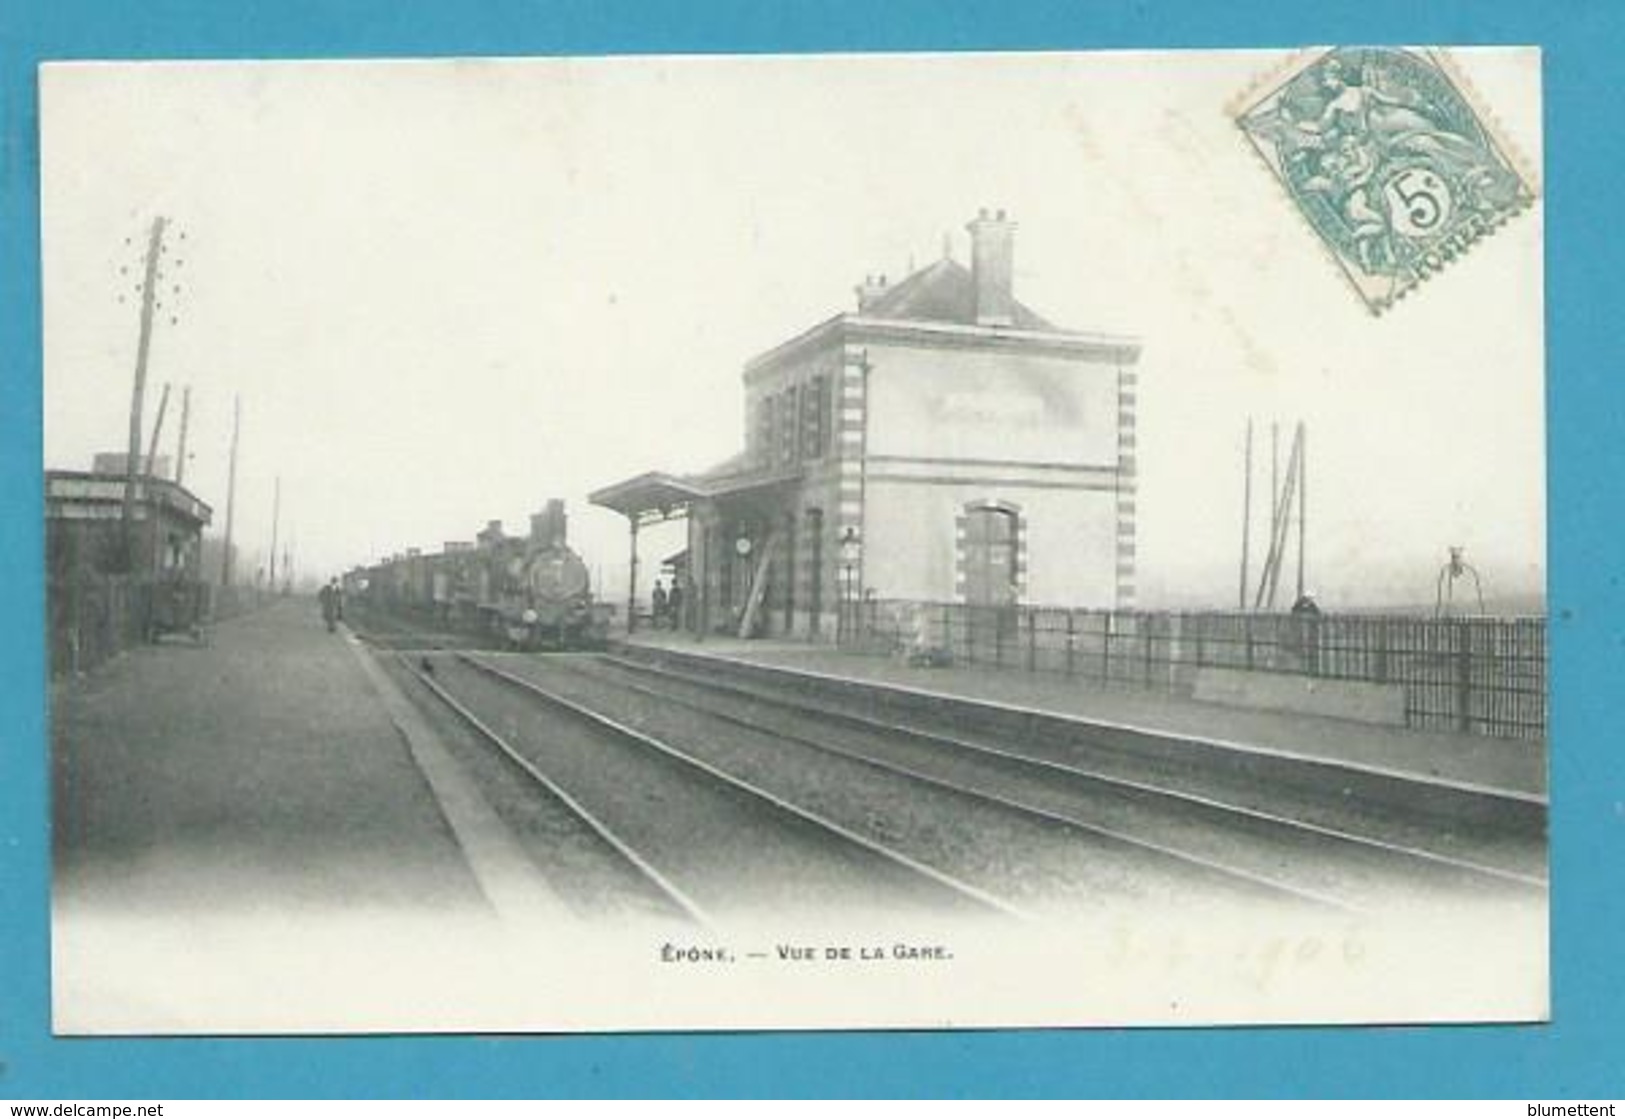 CPA - Chemin De Fer Train En Gare De EPONE 78 - Epone